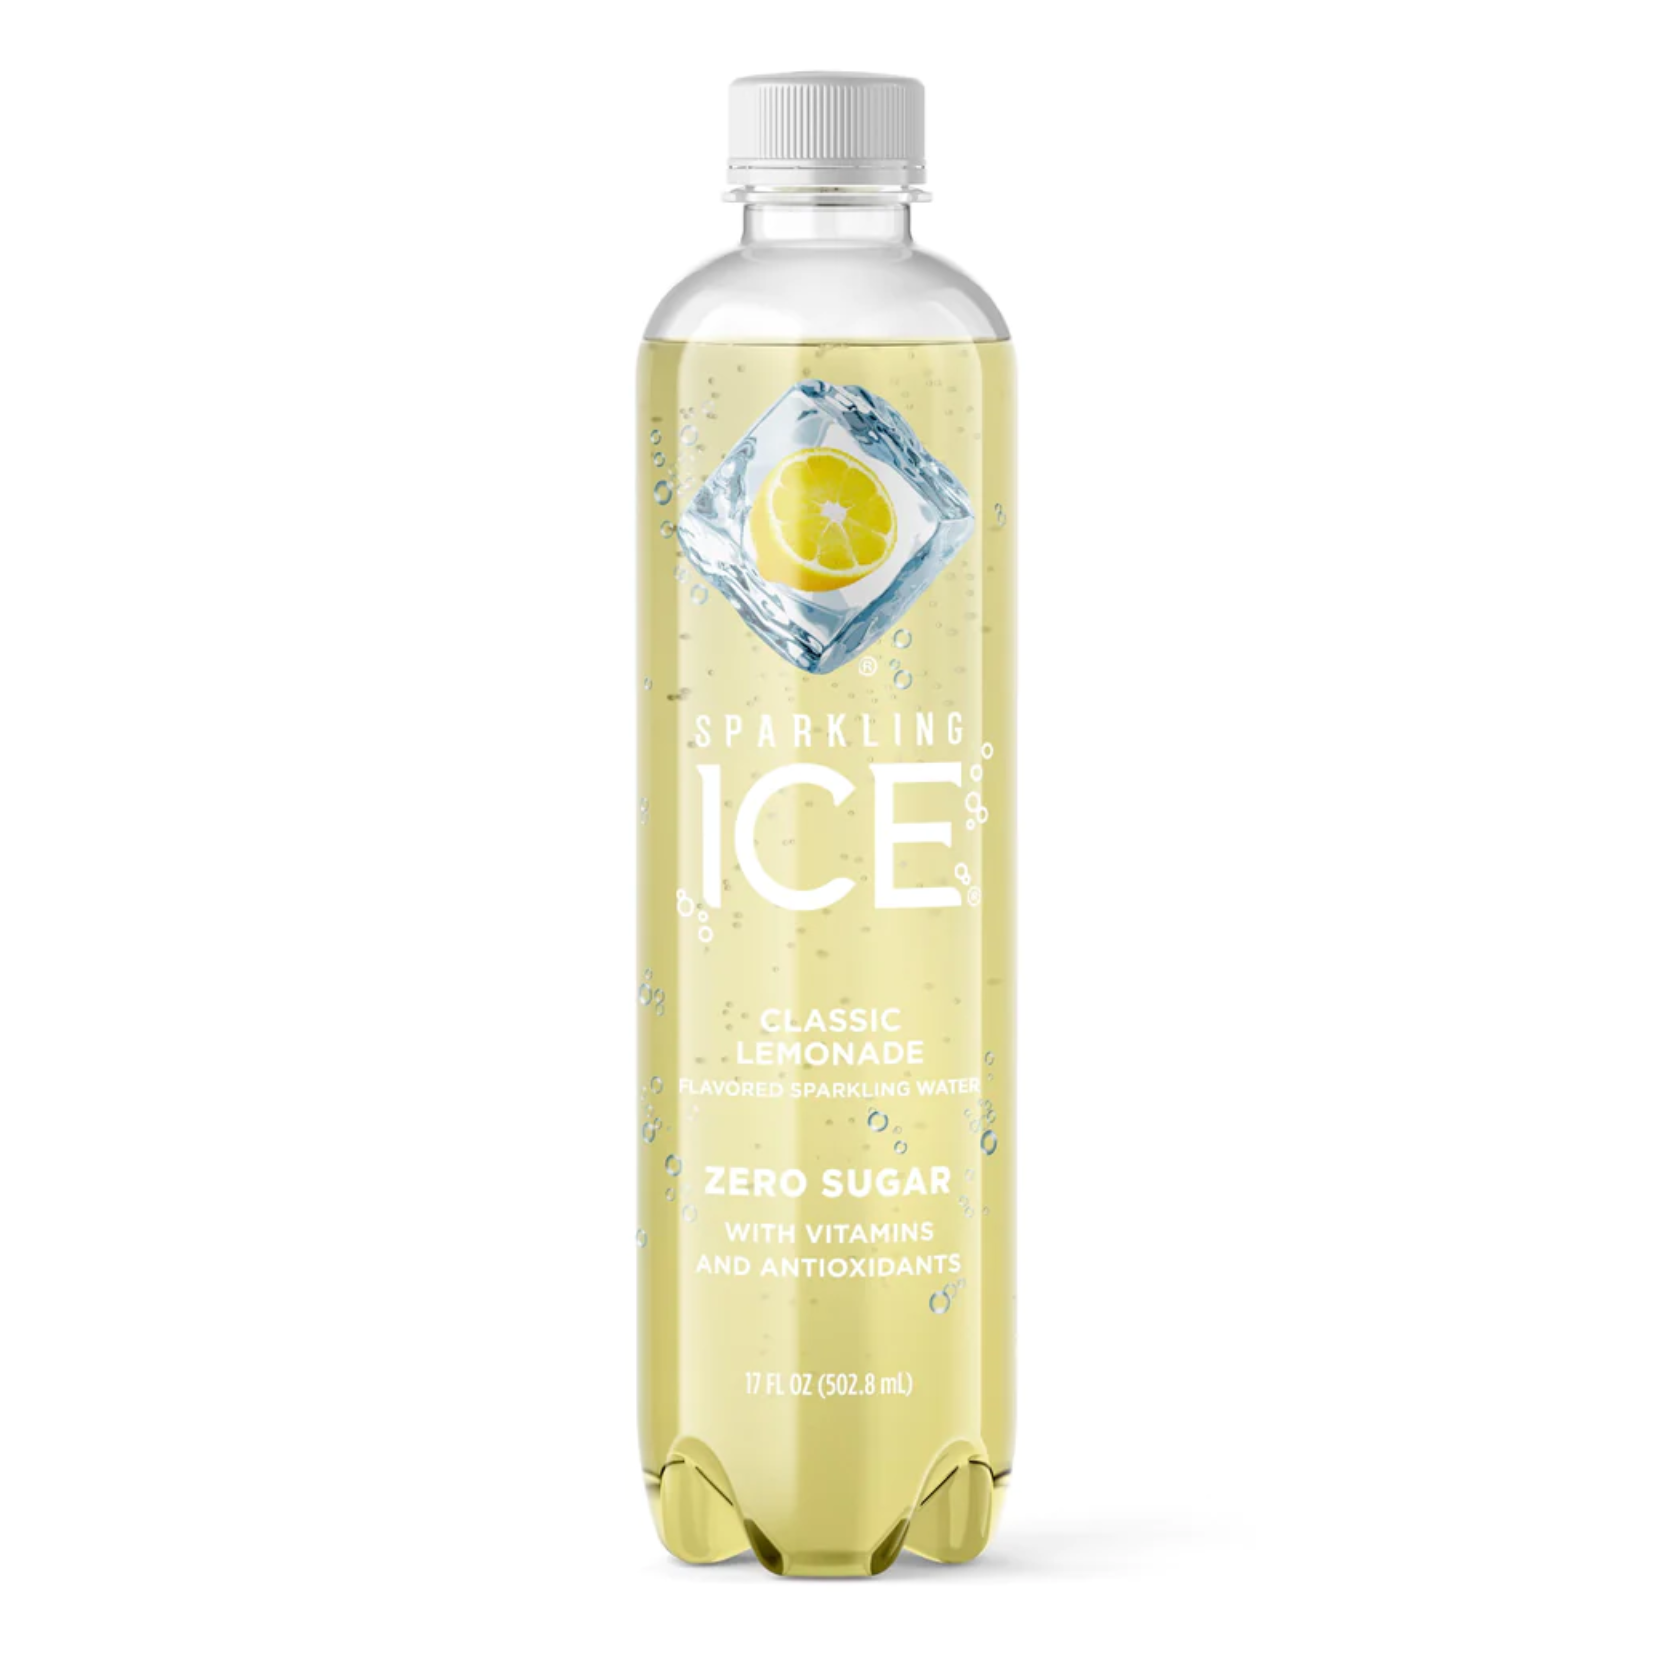 Sparkling Ice Classic Lemonade Sparkling Water 503ml